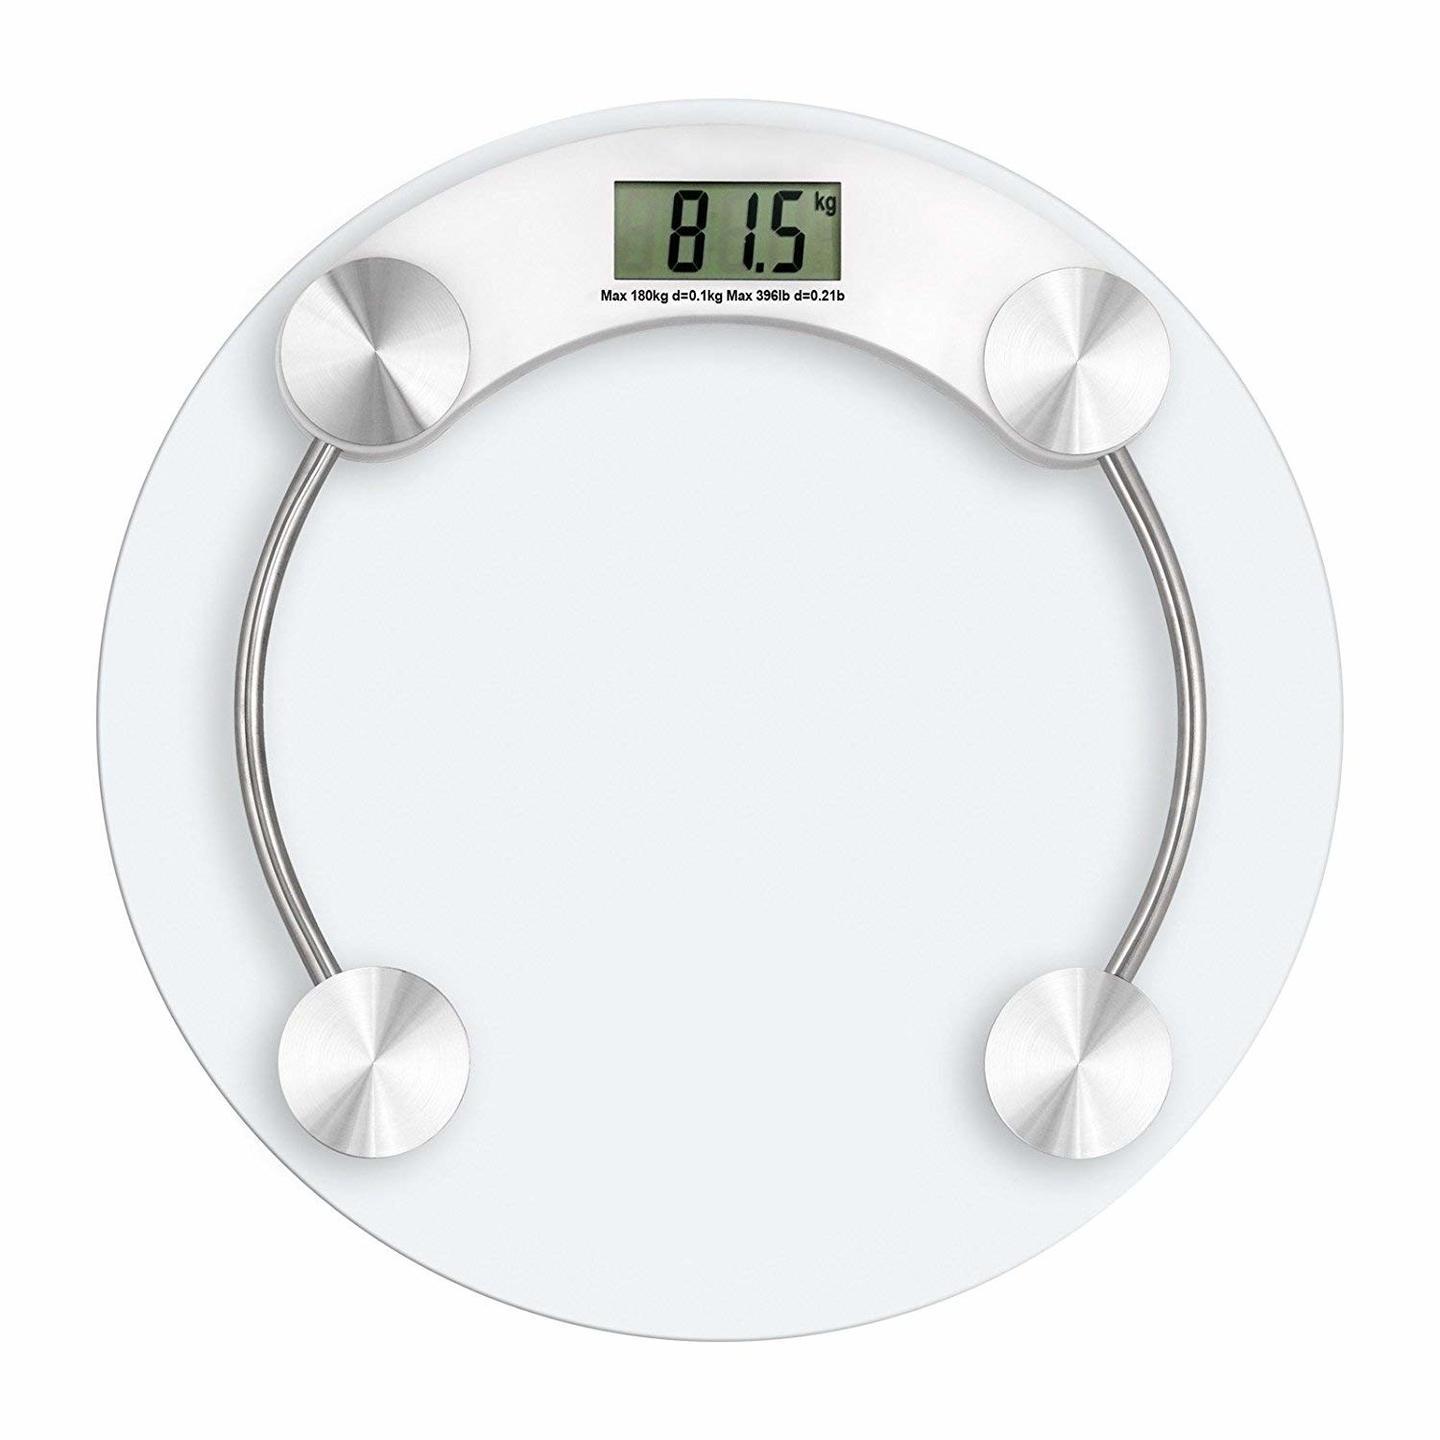 JonPrix Digital Weighing Scale